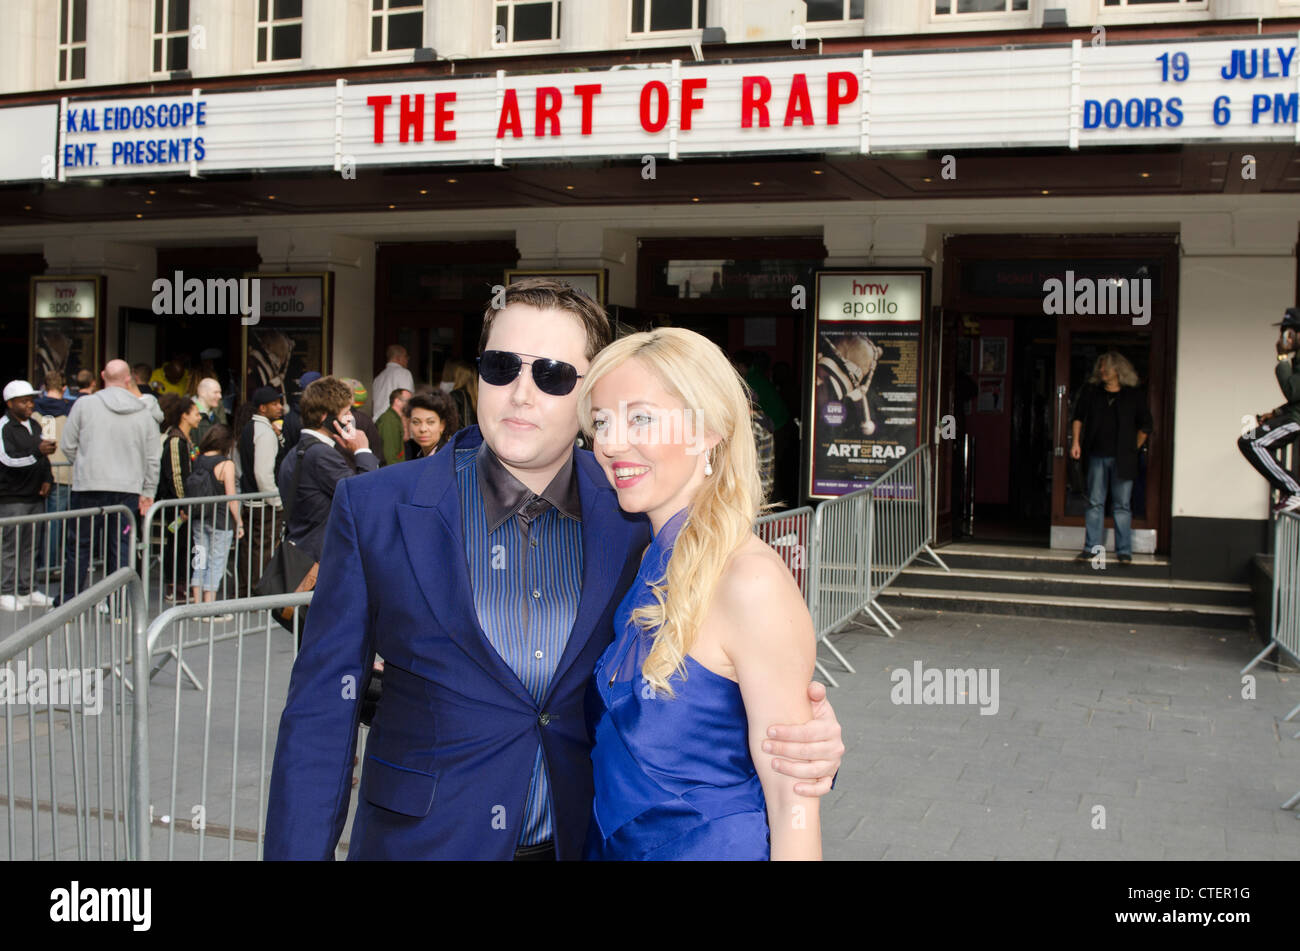 Robin John Gibb und Freundin besuchen Filmpremiere The Art of Rap Hammersmith Apollo, London Uk Stockfoto